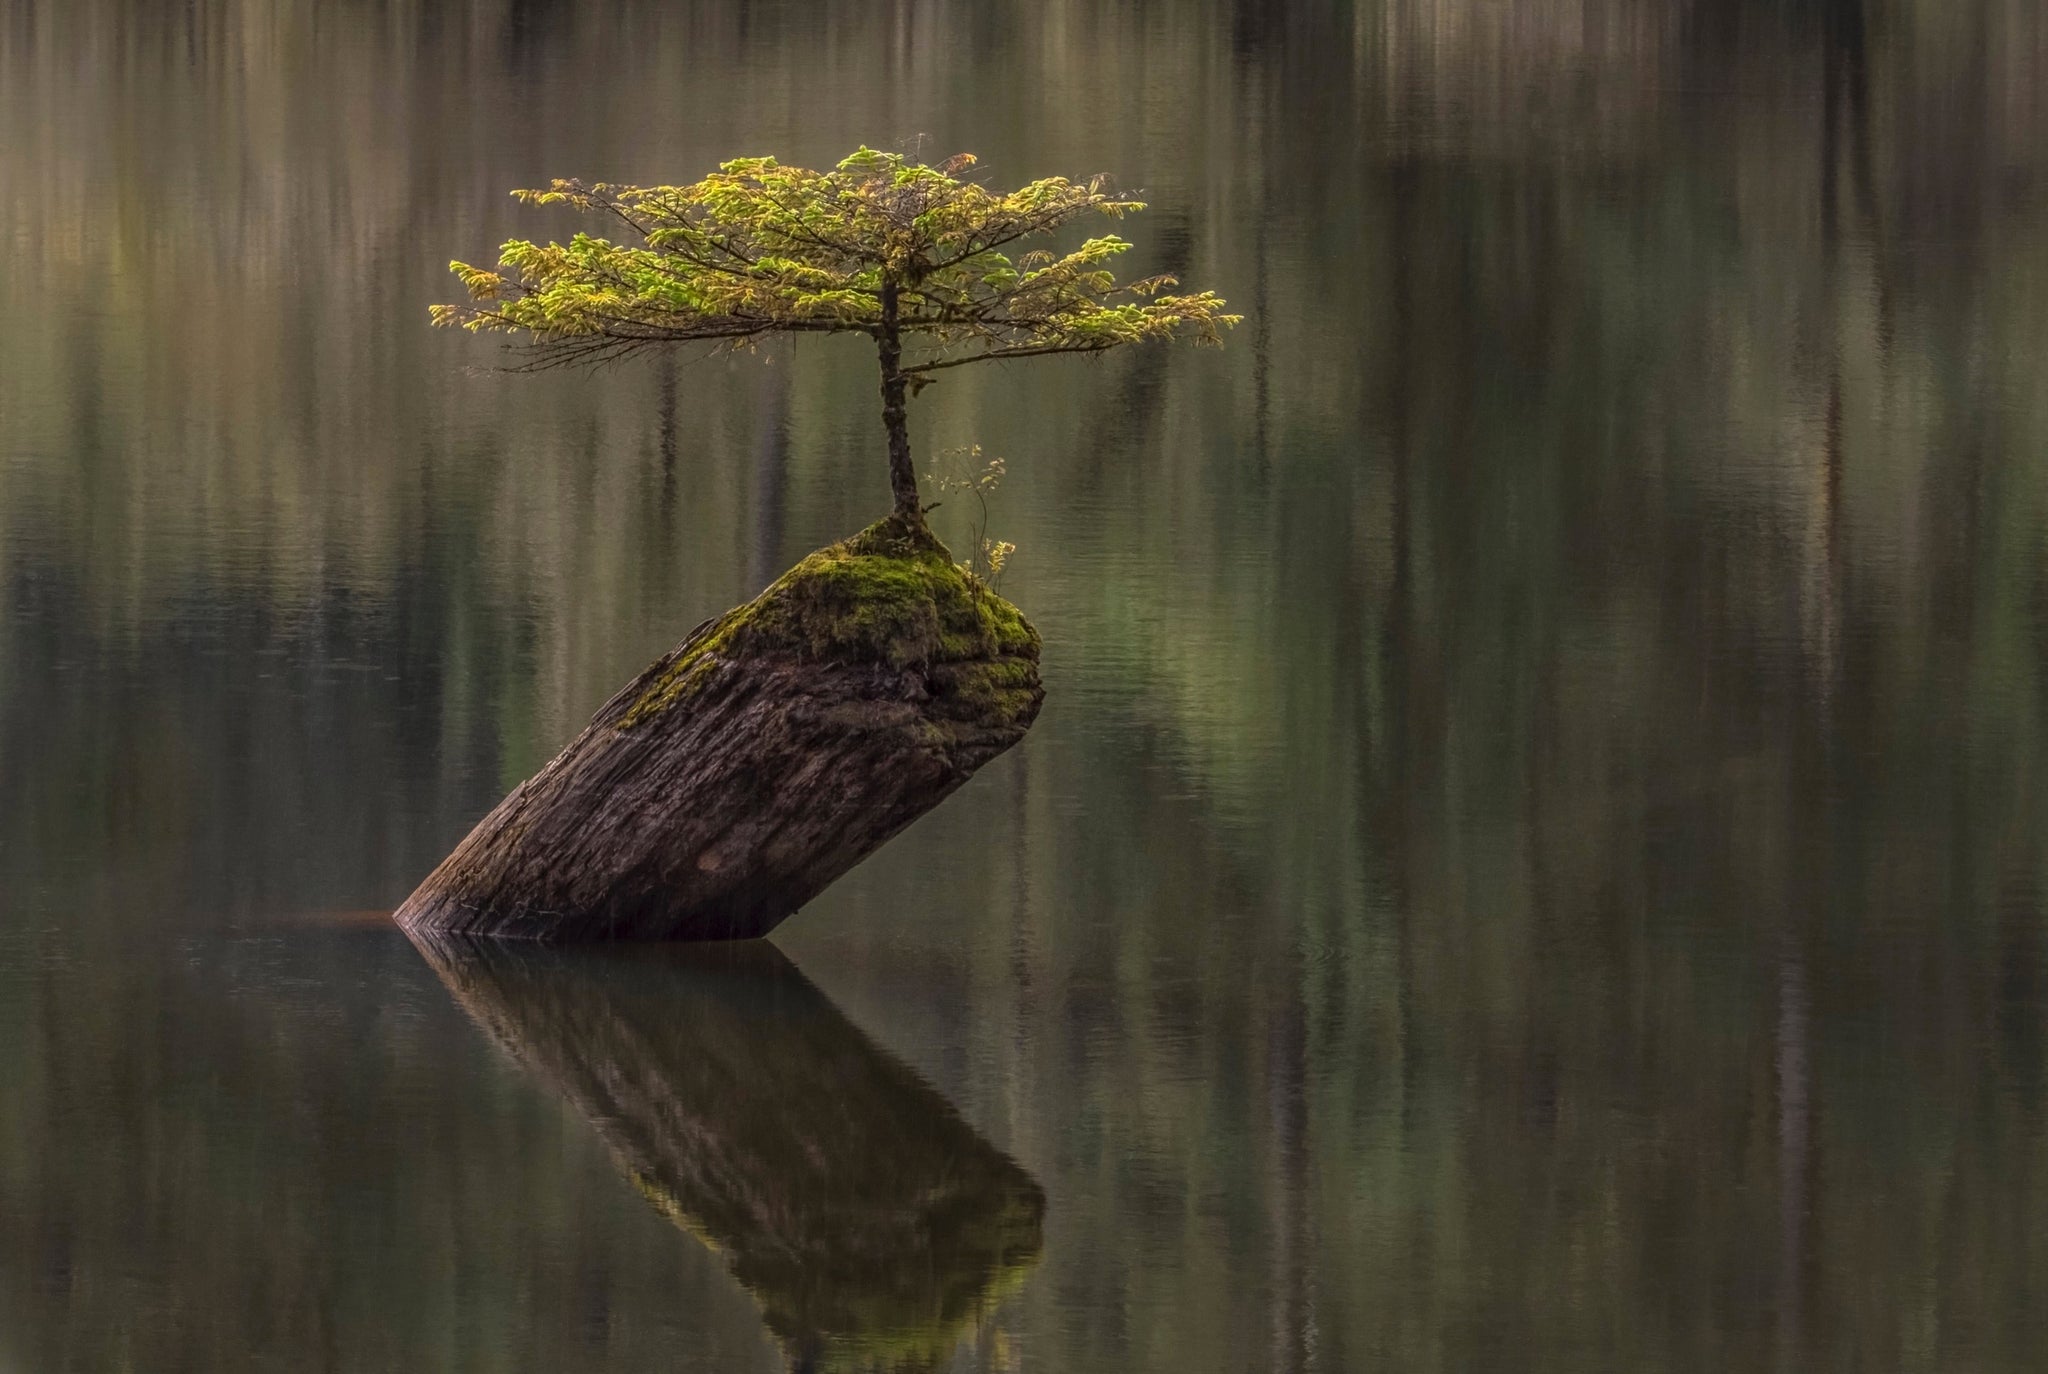 Fairy Lake Bonsai Tree - Vancouver Island, BC